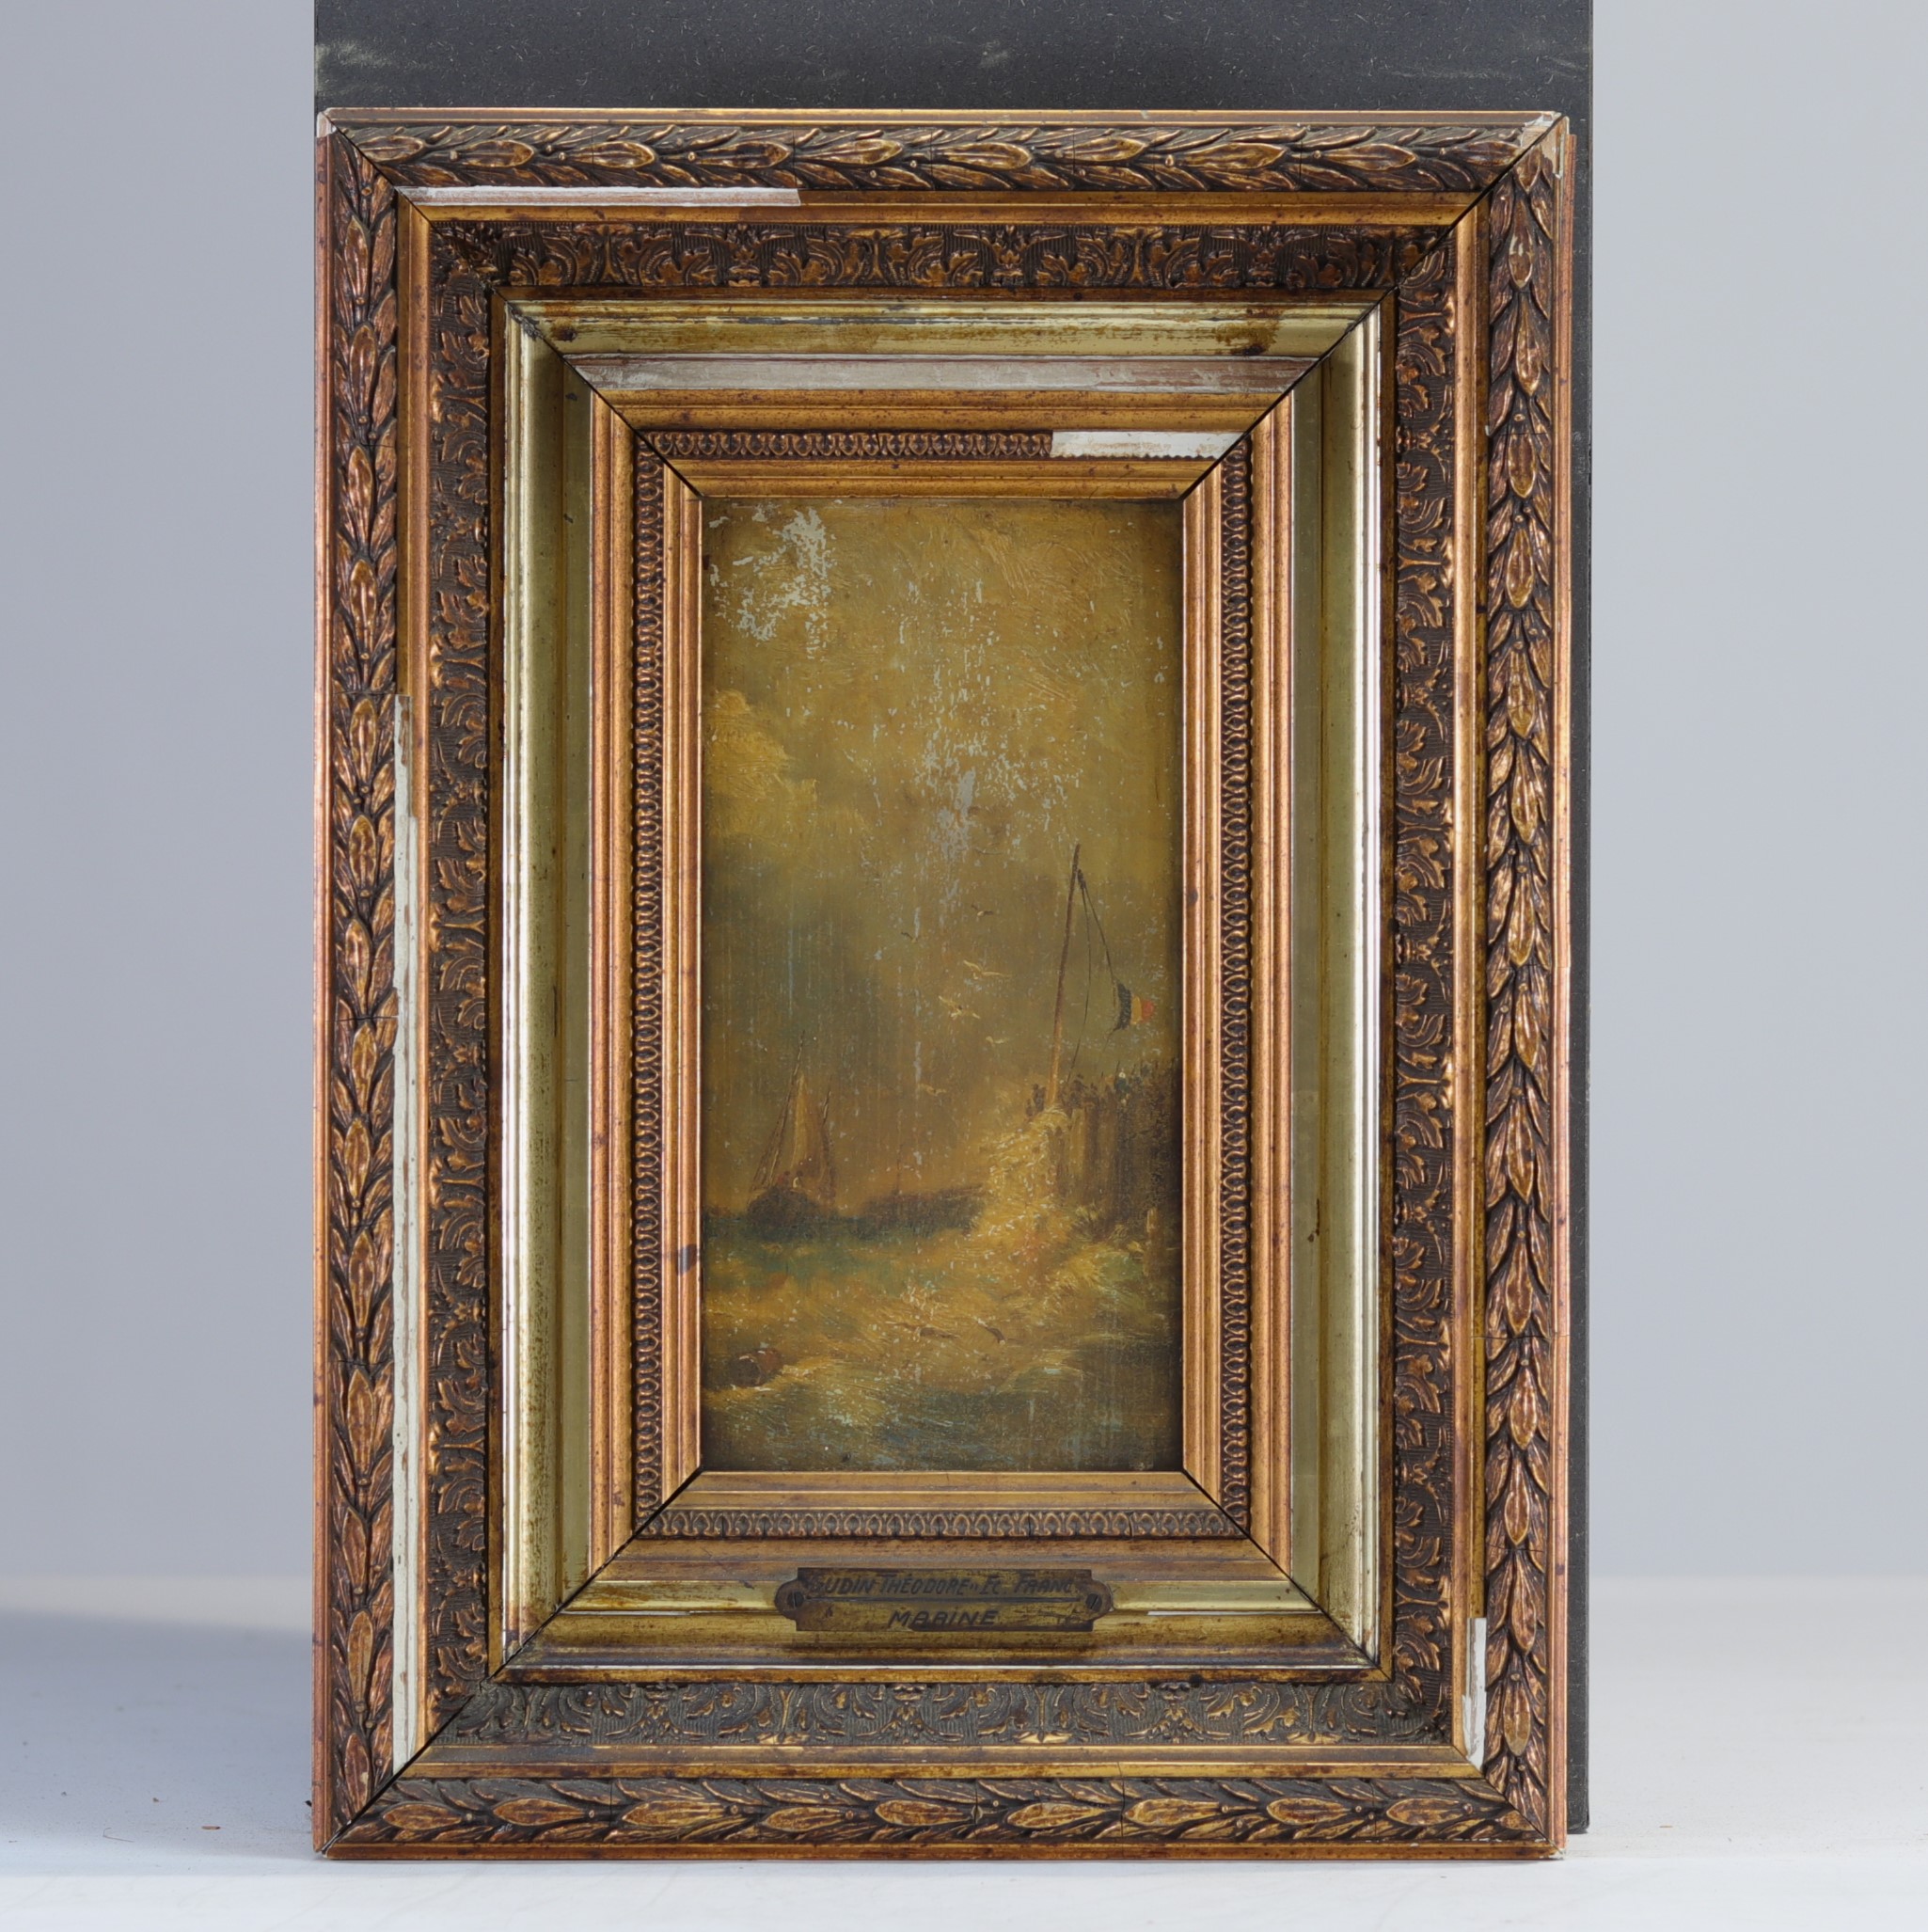 Theodore GUDIN (1802-1880) attr. to "Marine" Oil on panel, 19th century. - Image 2 of 3